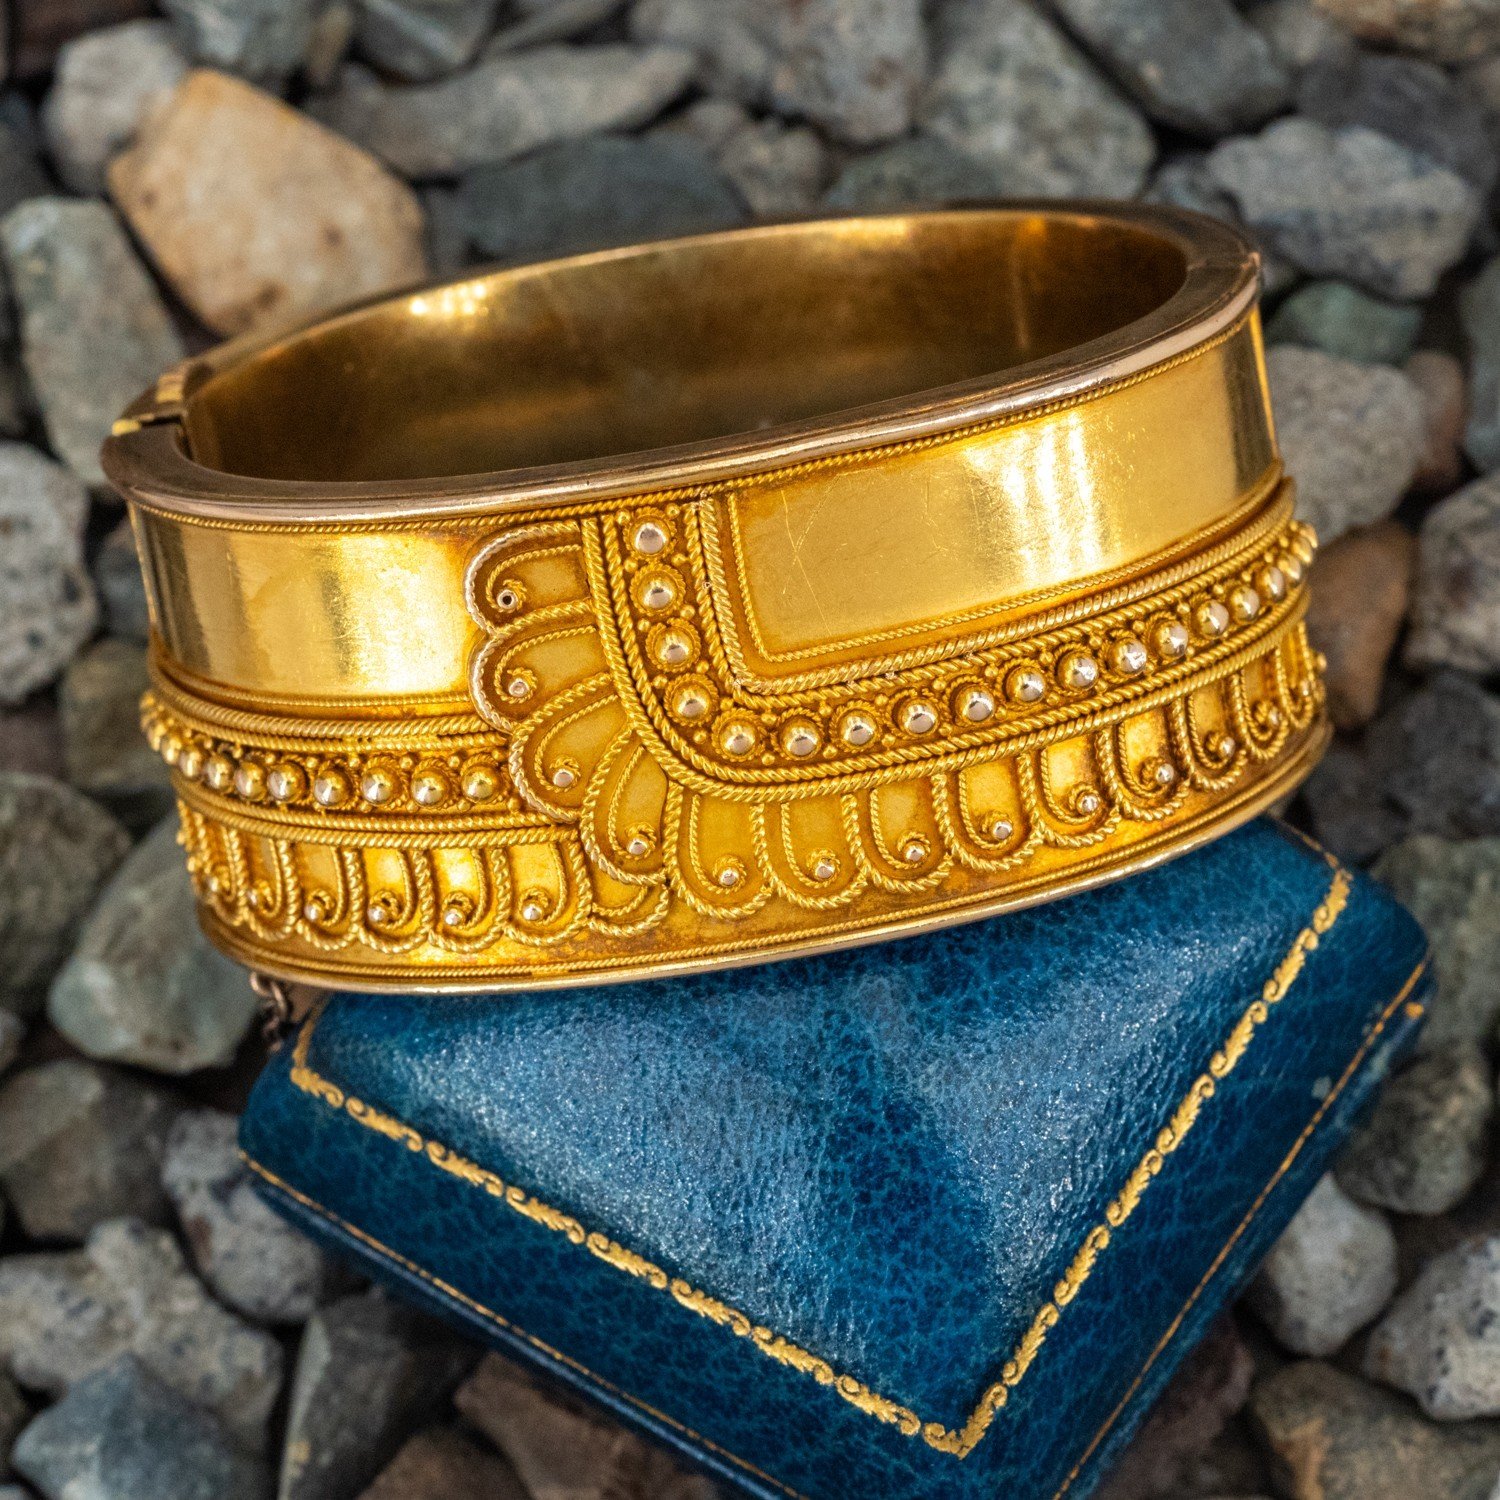 Buy DIYthinker Ancient Egypt Pharaoh Golden Pattern Bracelet Rope Hand  Chain Leather Money Wristband at Amazon.in